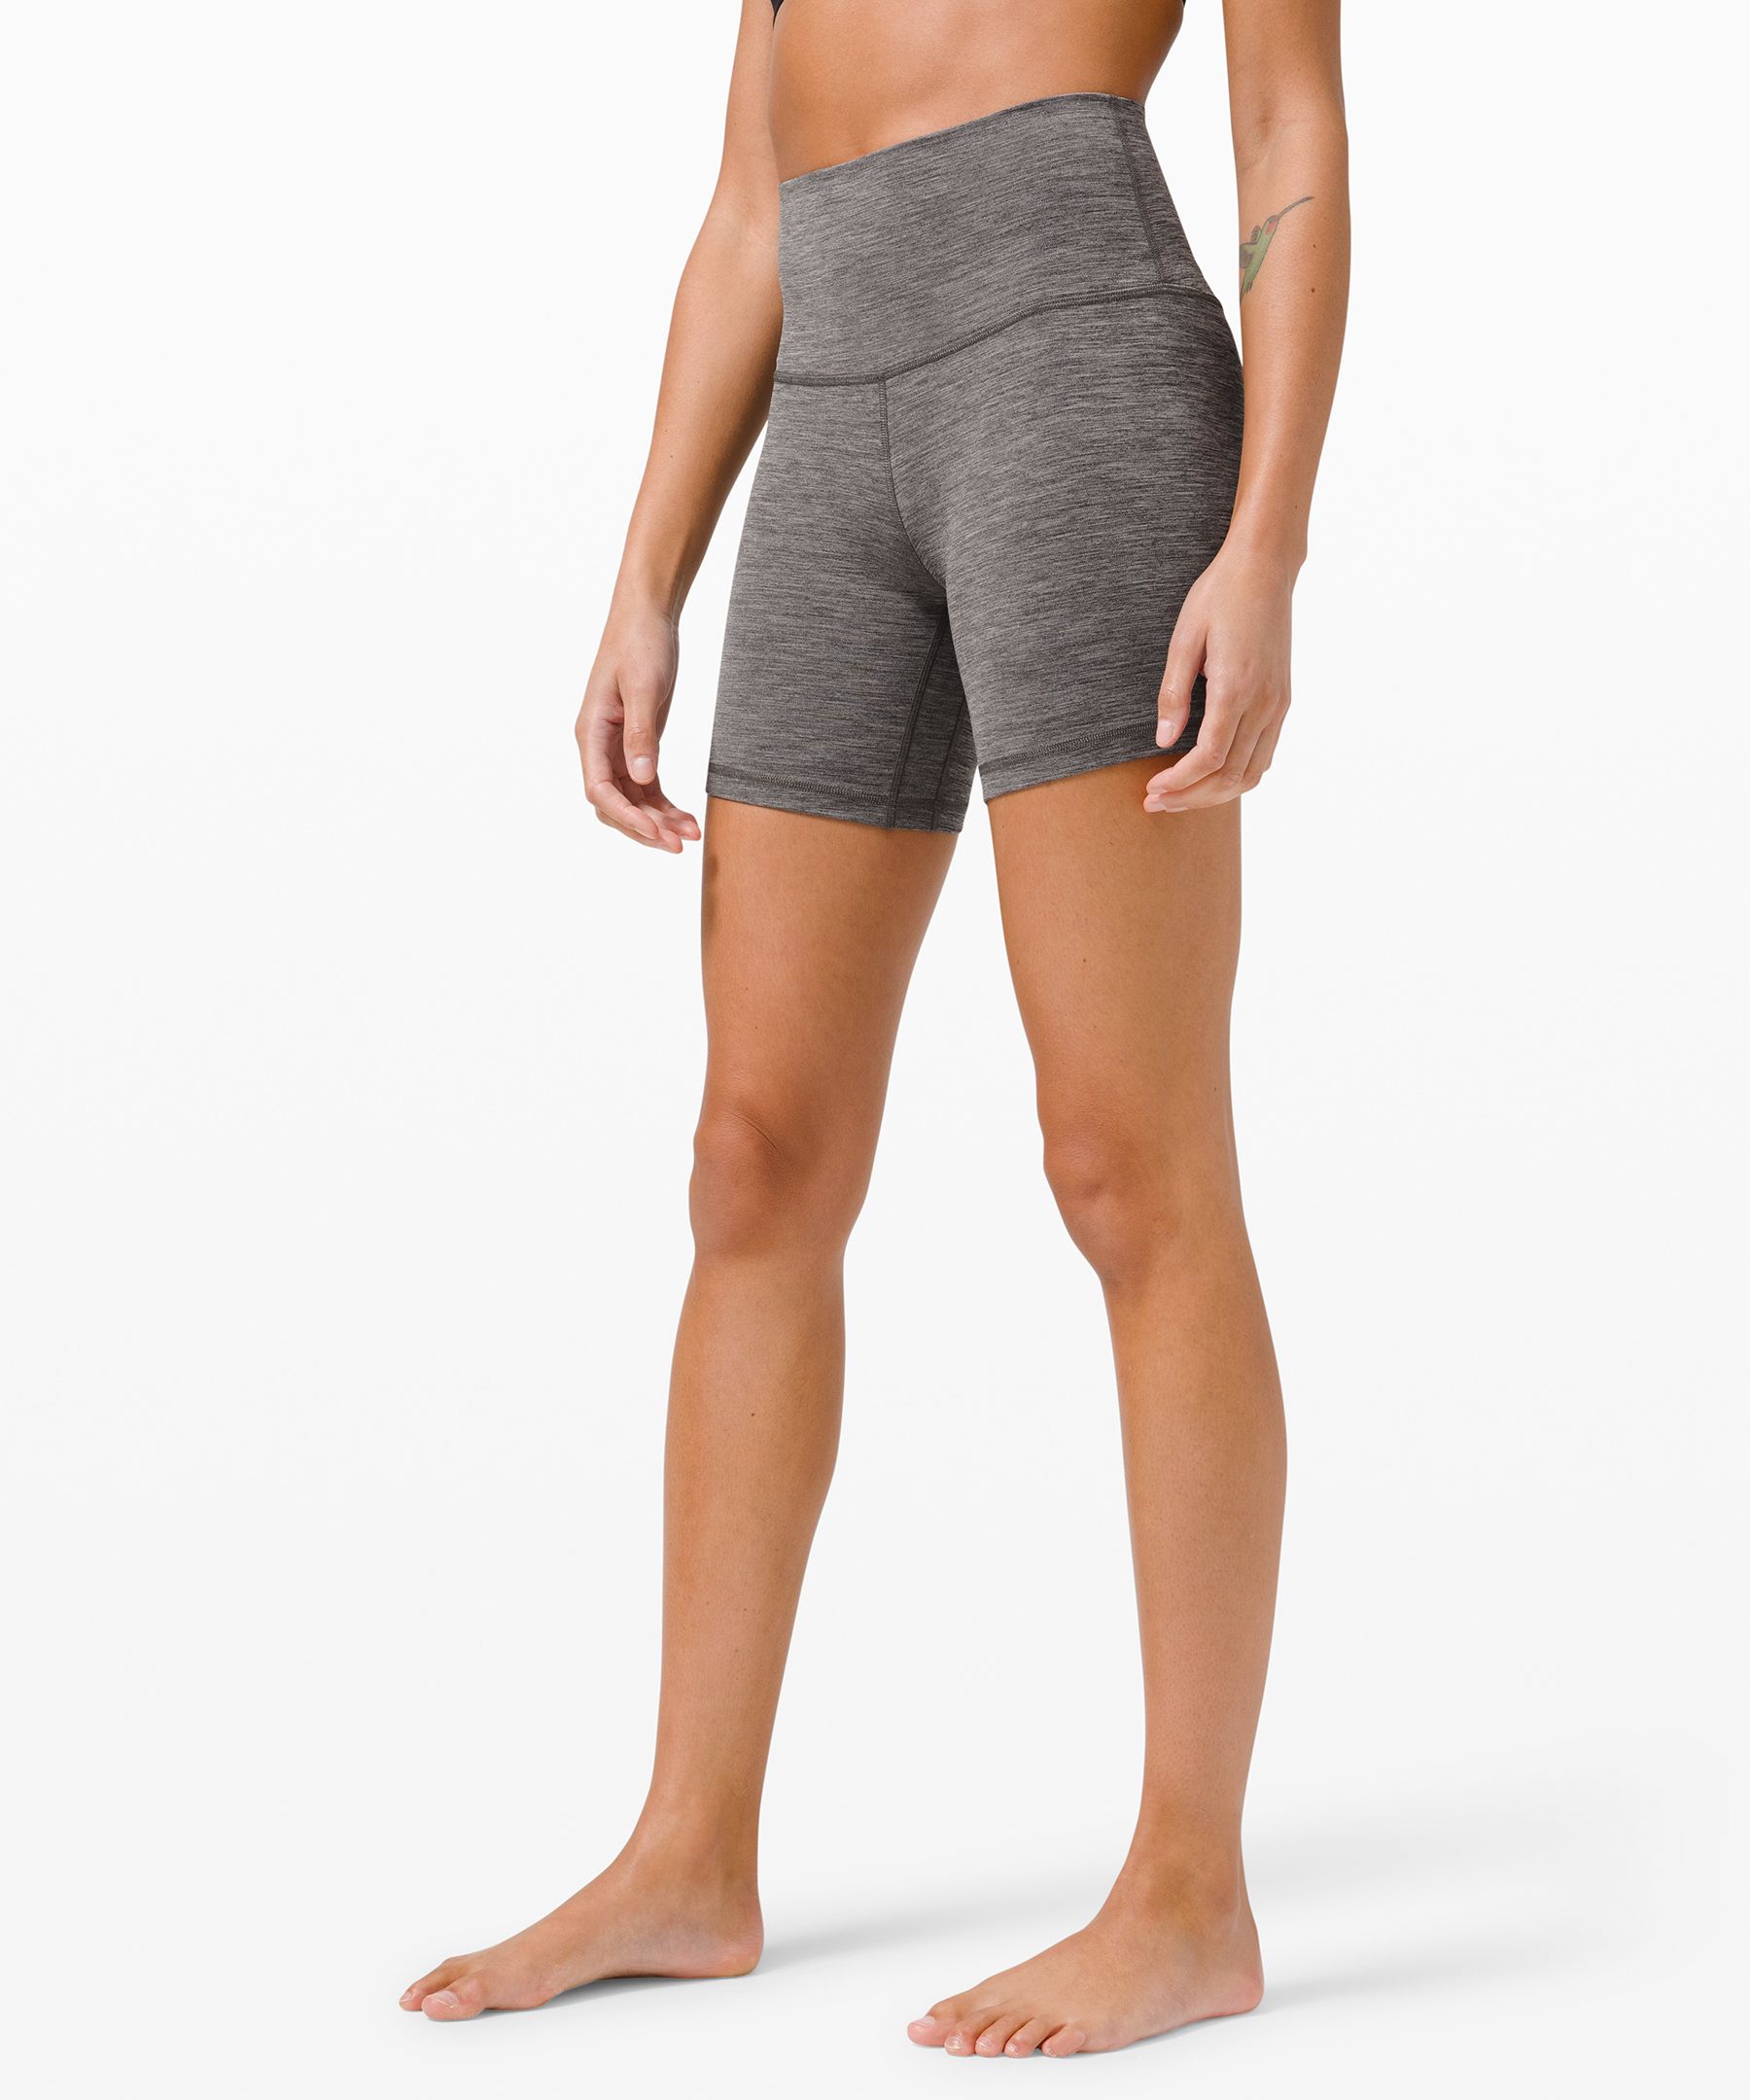 Lululemon Align™ High-rise Shorts 6" In Heathered Black